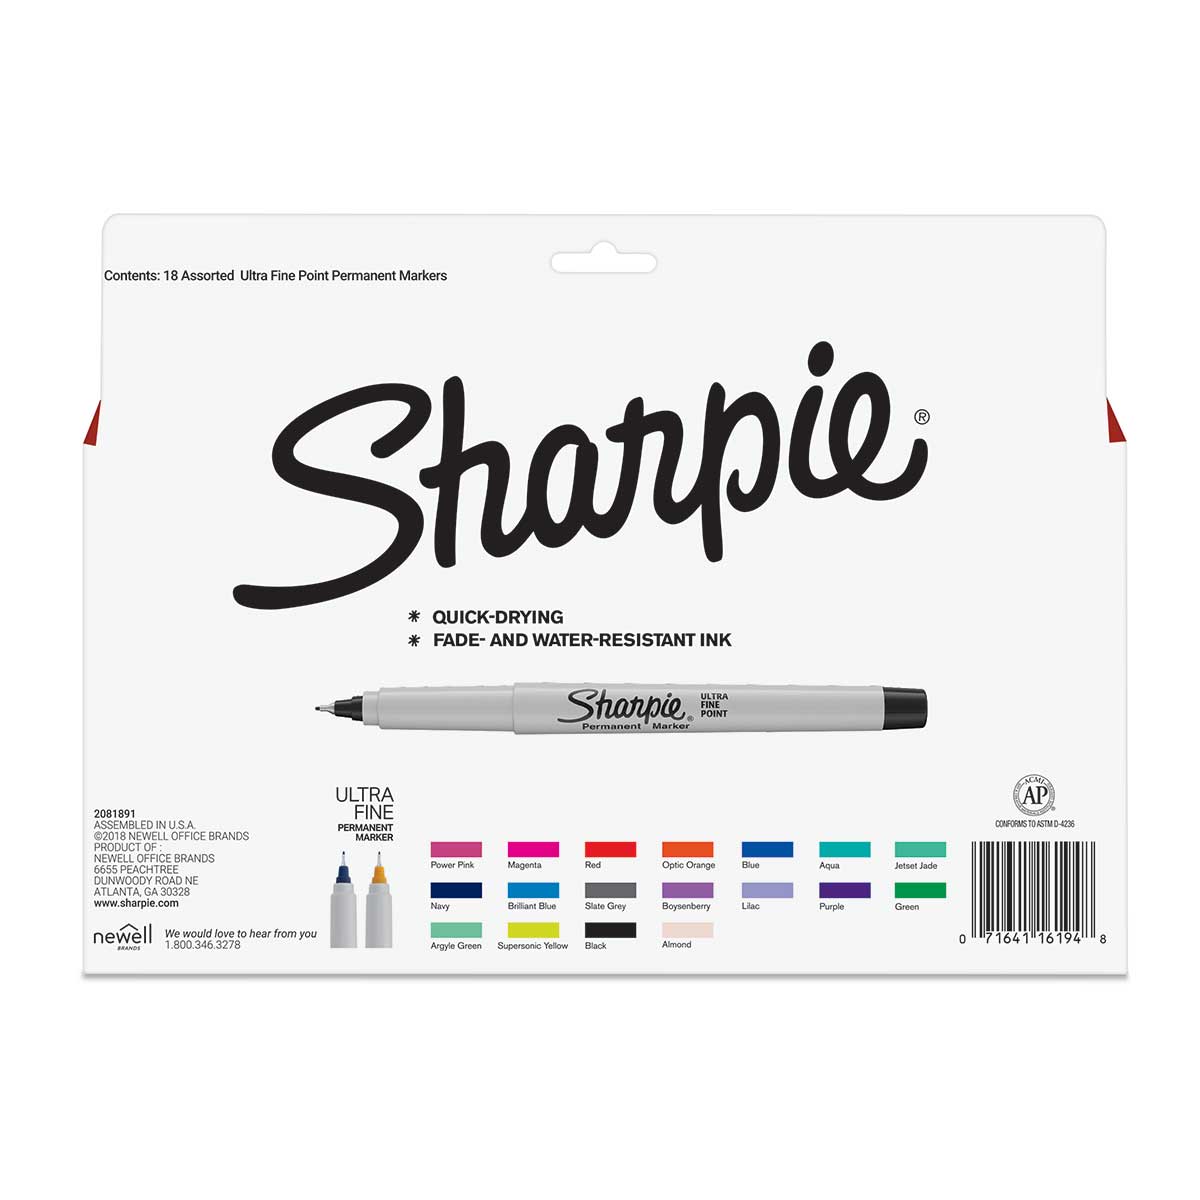 Sharpie Ultrafine 18ct Permanent Markers